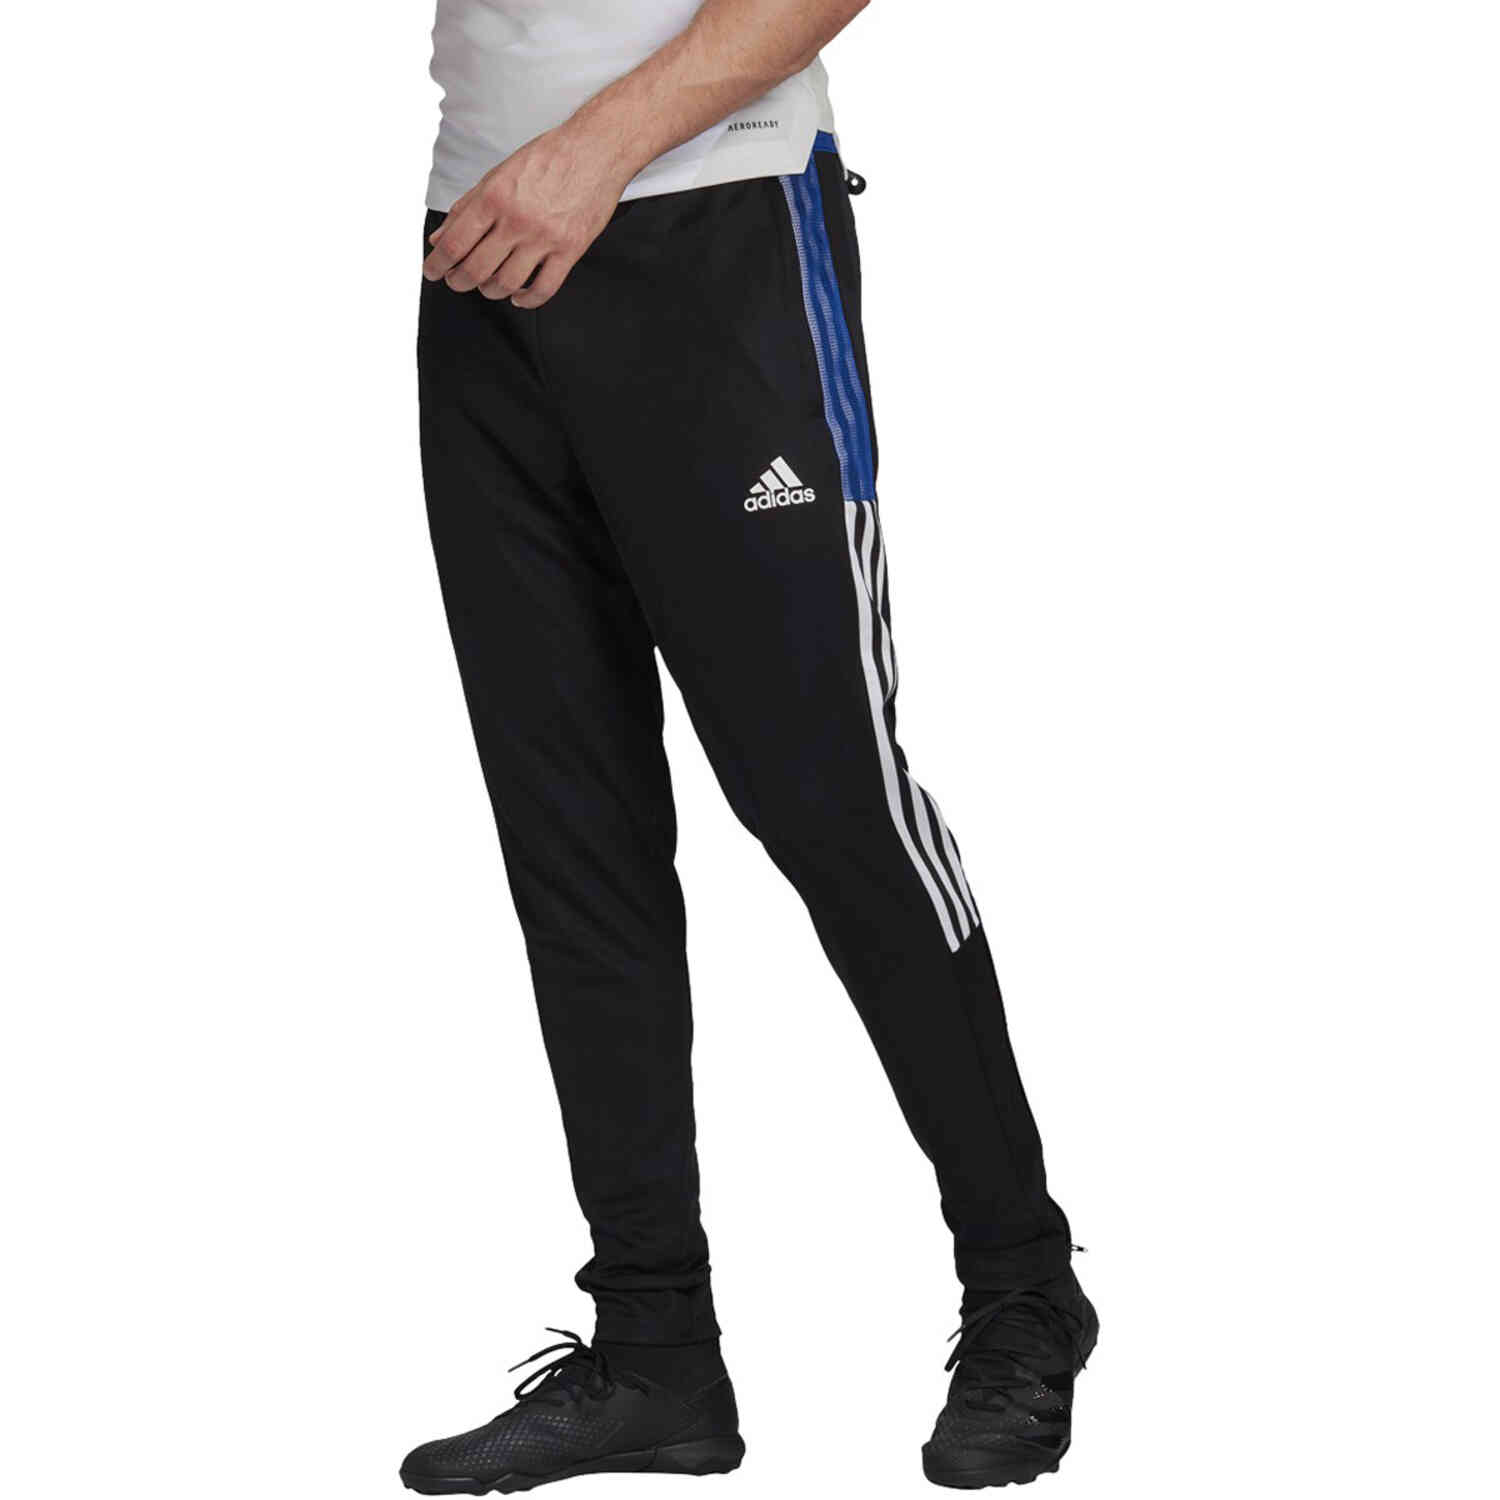 Aanpassen aanval efficiëntie adidas Tiro21 Track Pants - Black/Royal Blue - SoccerPro